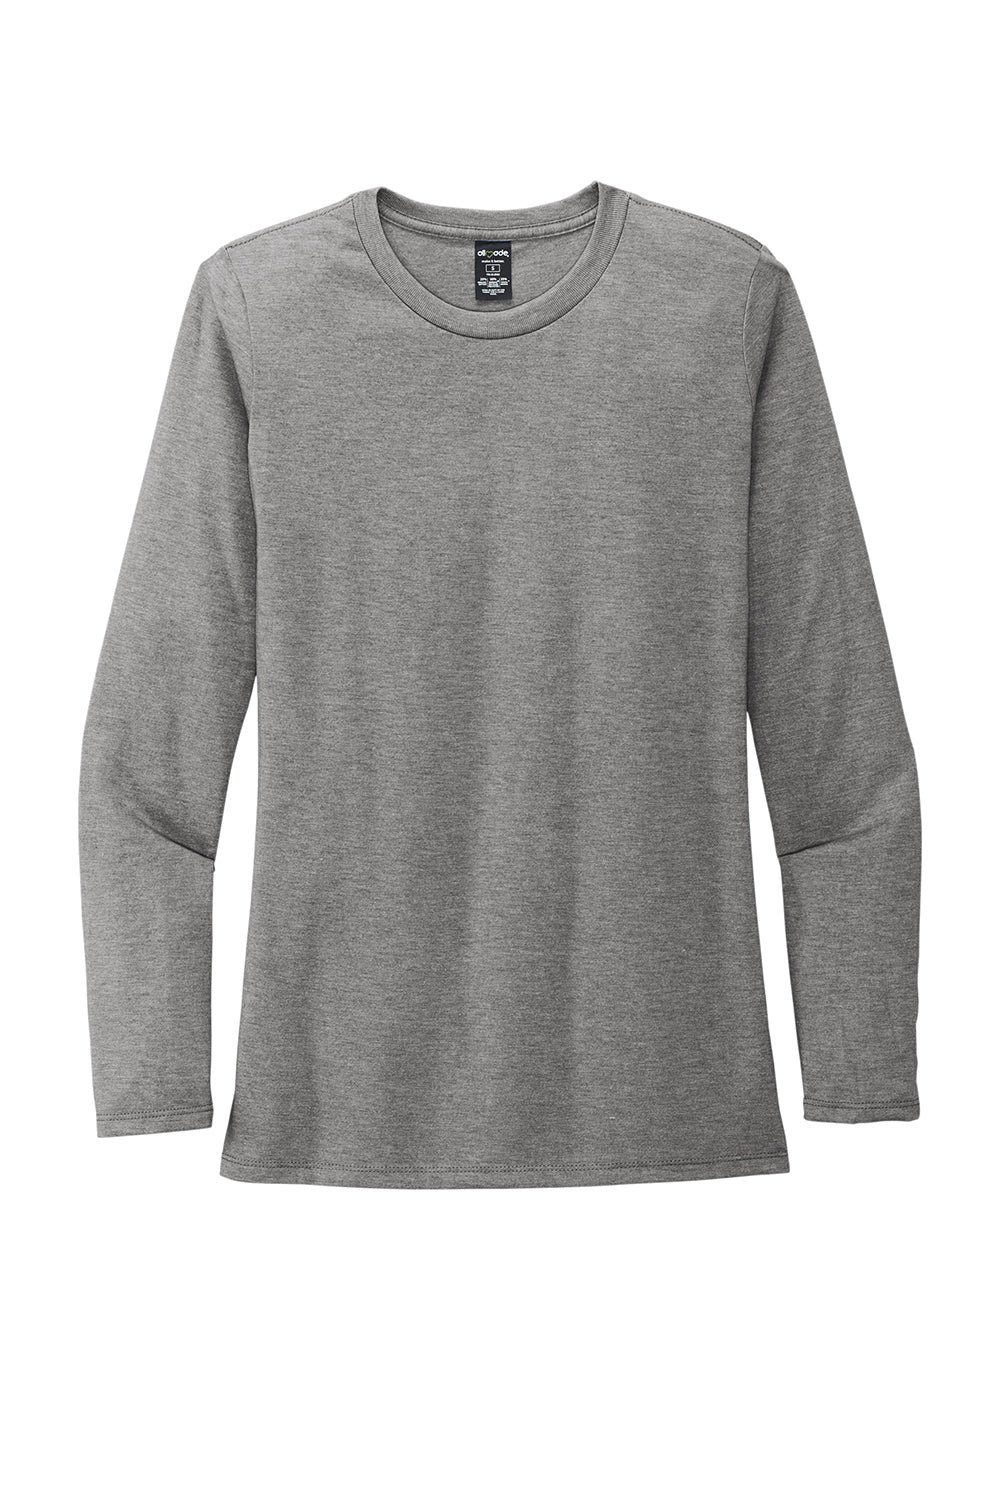 Allmade AL6008 Womens Long Sleeve Crewneck T-Shirt Aluminum Grey Flat Front